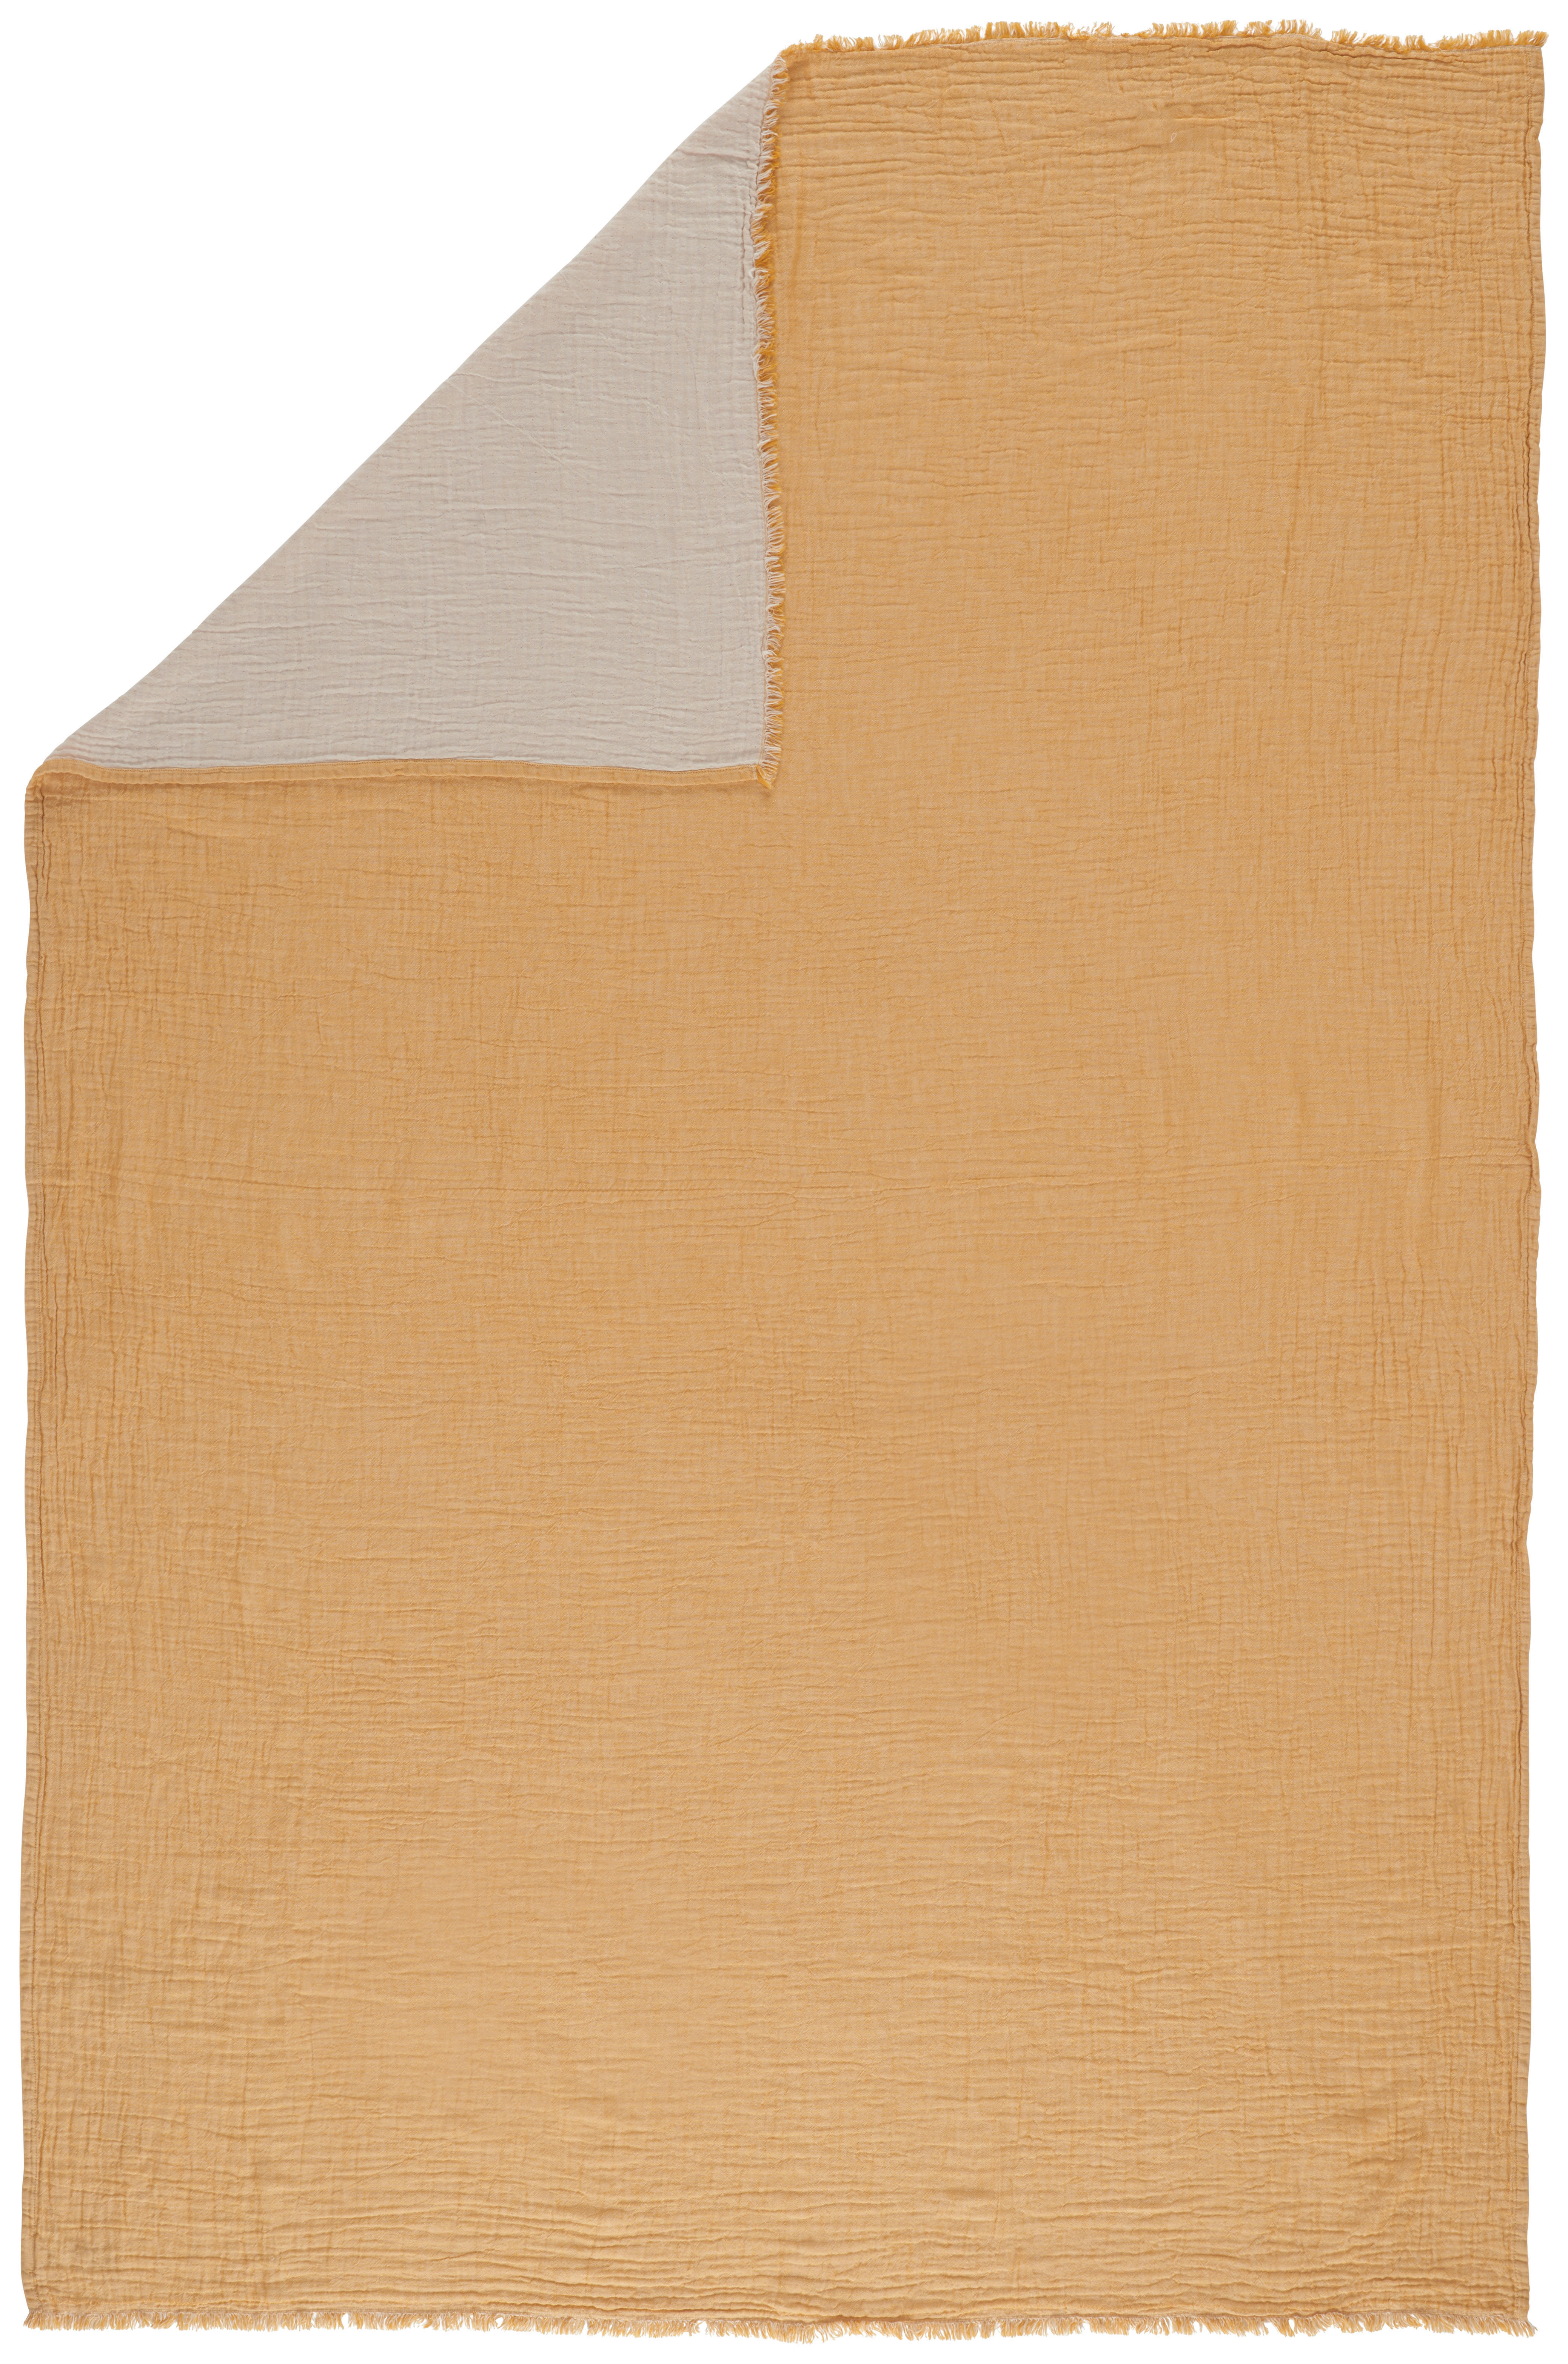 ĆEBE 150/200 cm  - prirodna boja/žuta, Konvencionalno, tekstil (150/200cm) - Ambiente